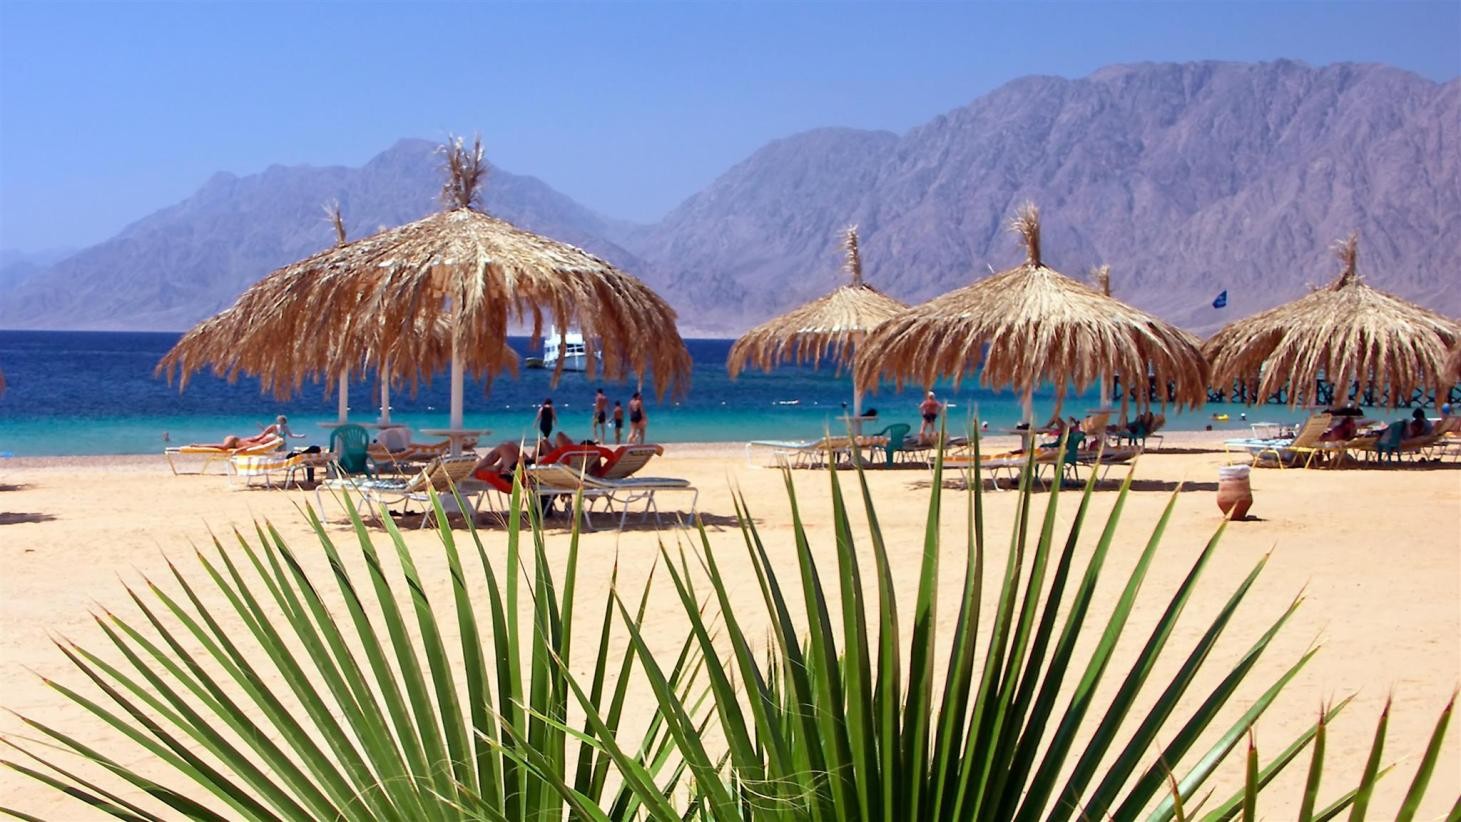 Nuweiba egyipt vacation ideas